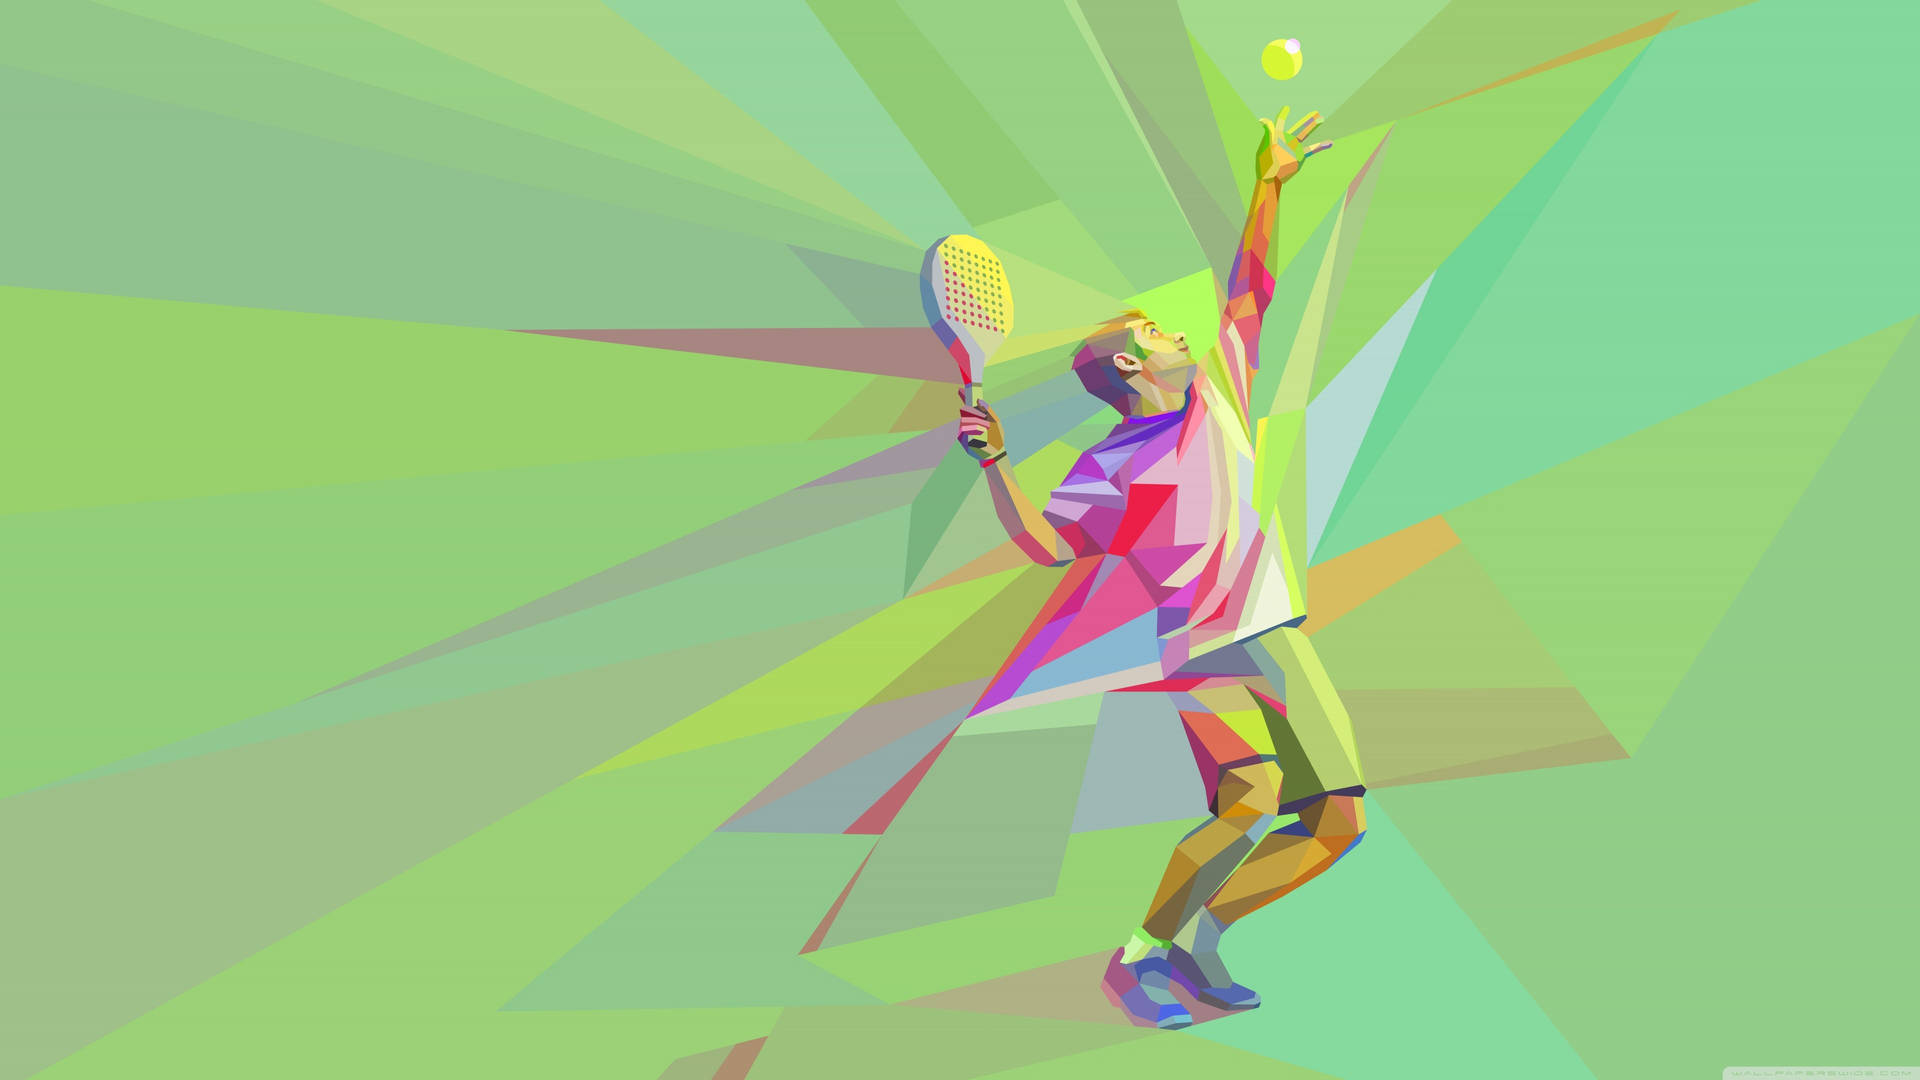 Geometric Tennis Player Art Wallpaper